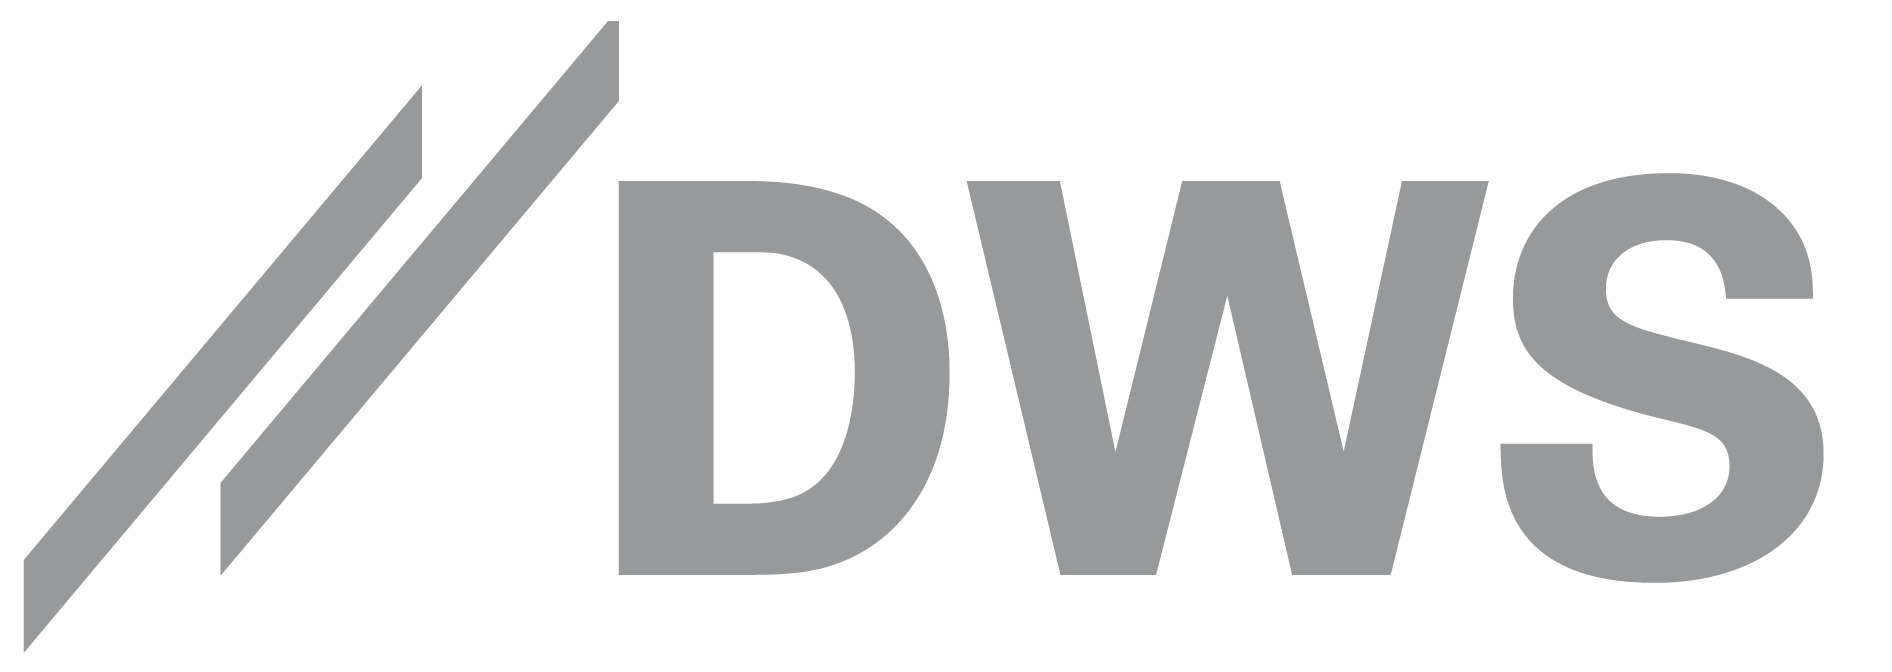 DWS Grundbesitz GmbH